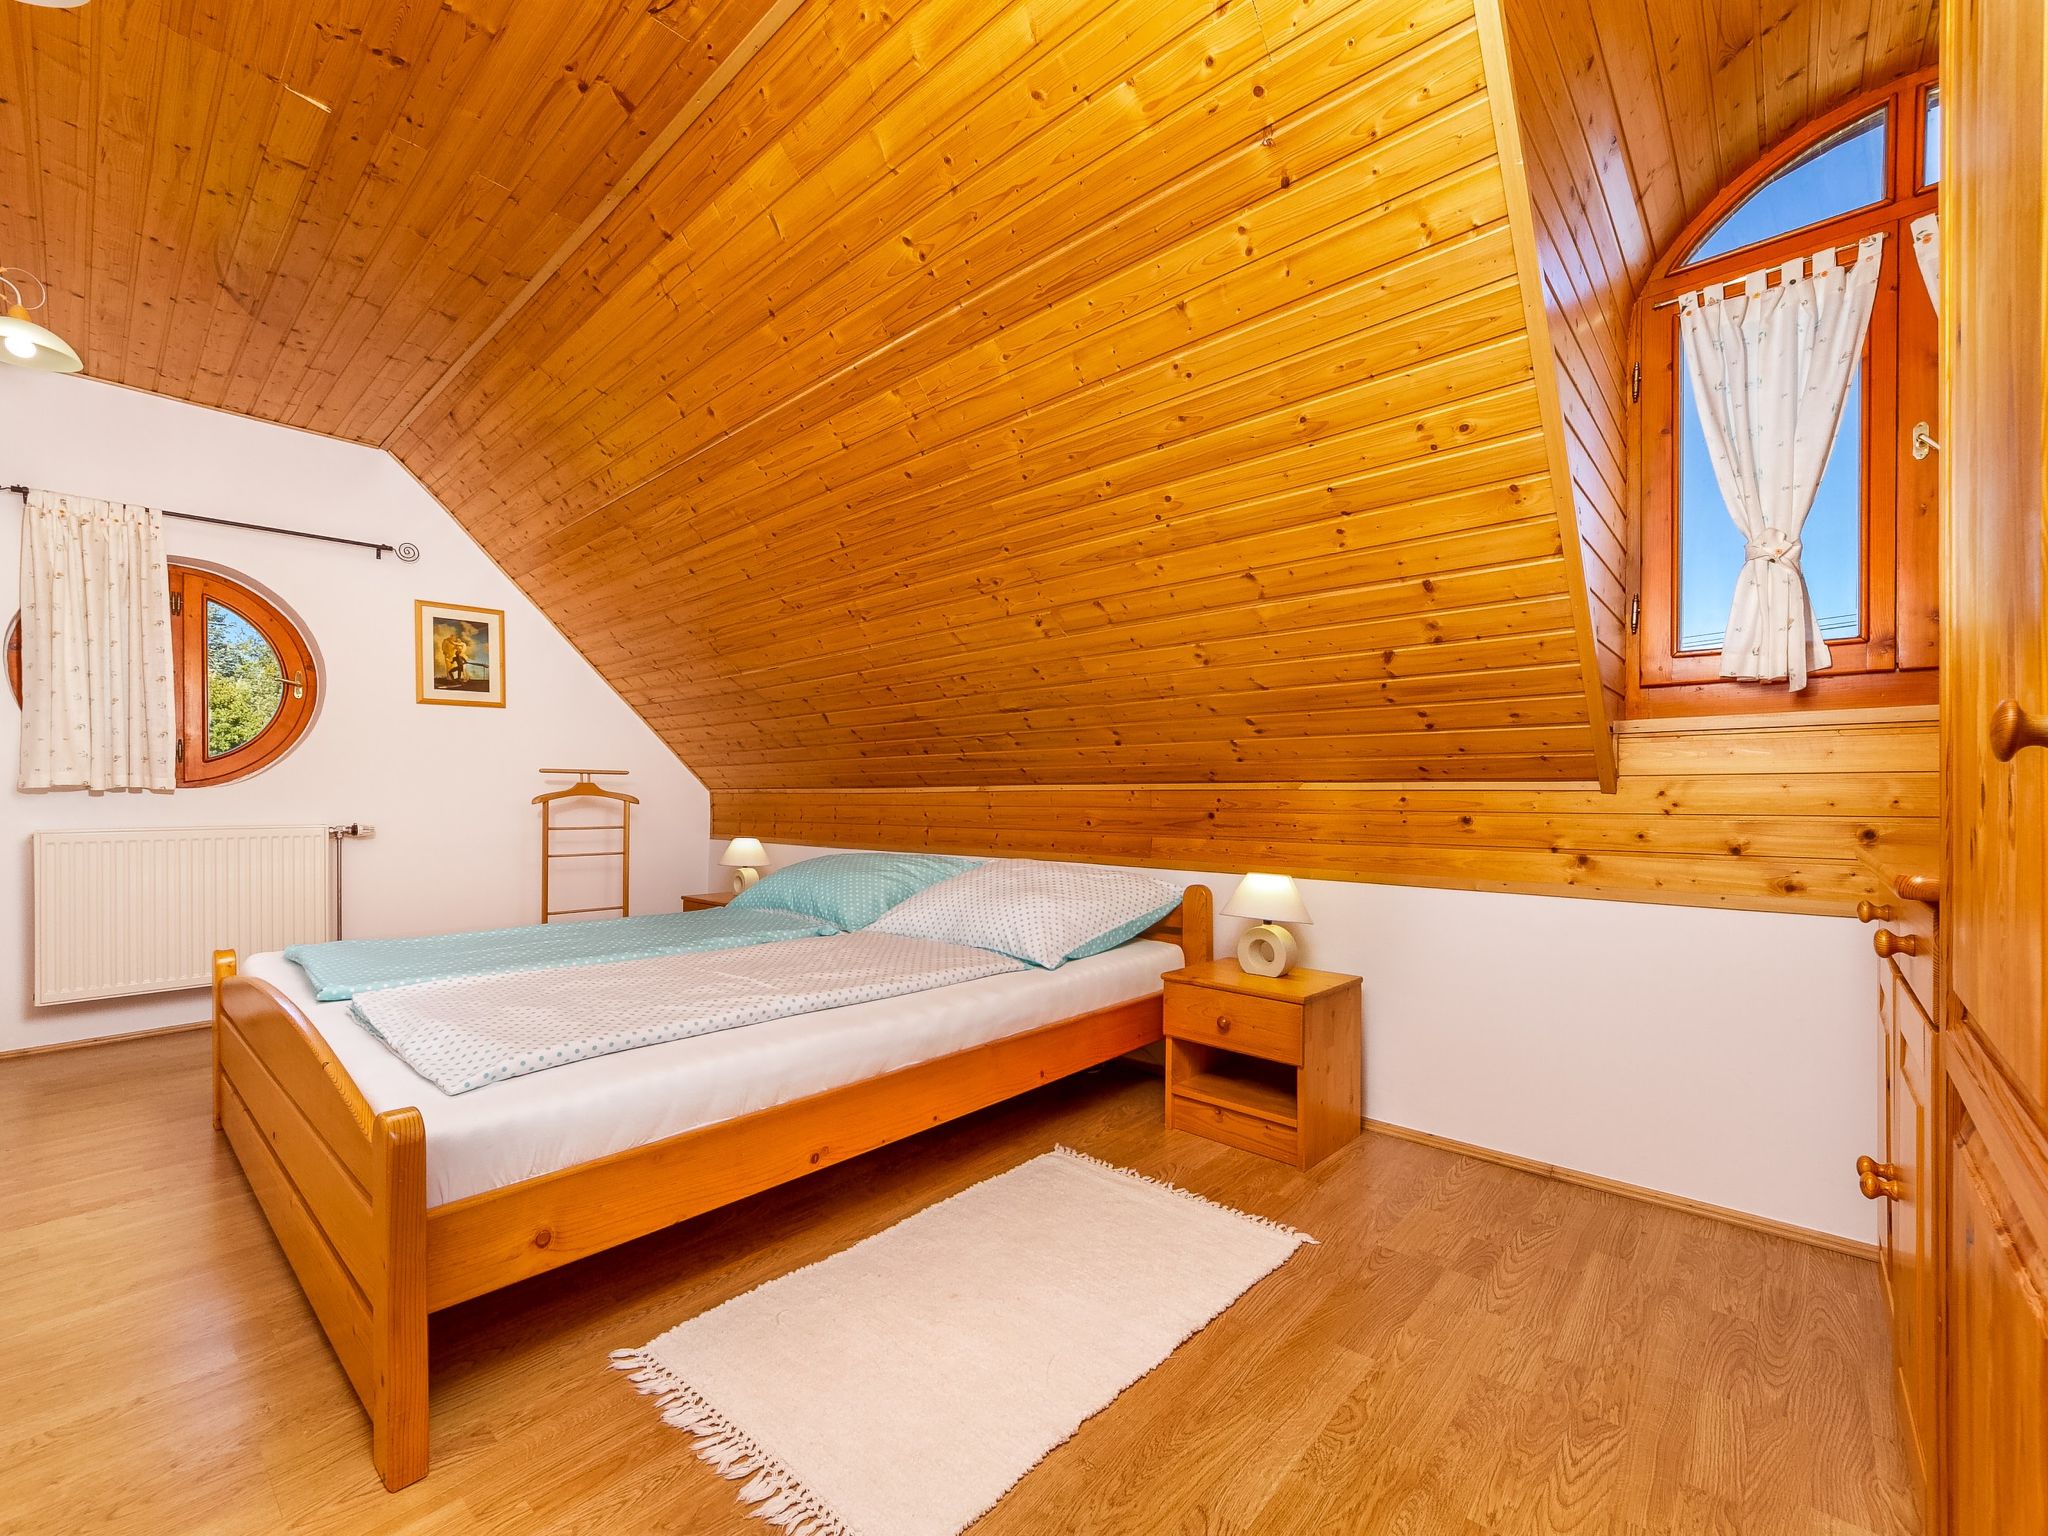 Foto 9 - Casa con 4 camere da letto a Balatonberény con piscina privata e giardino